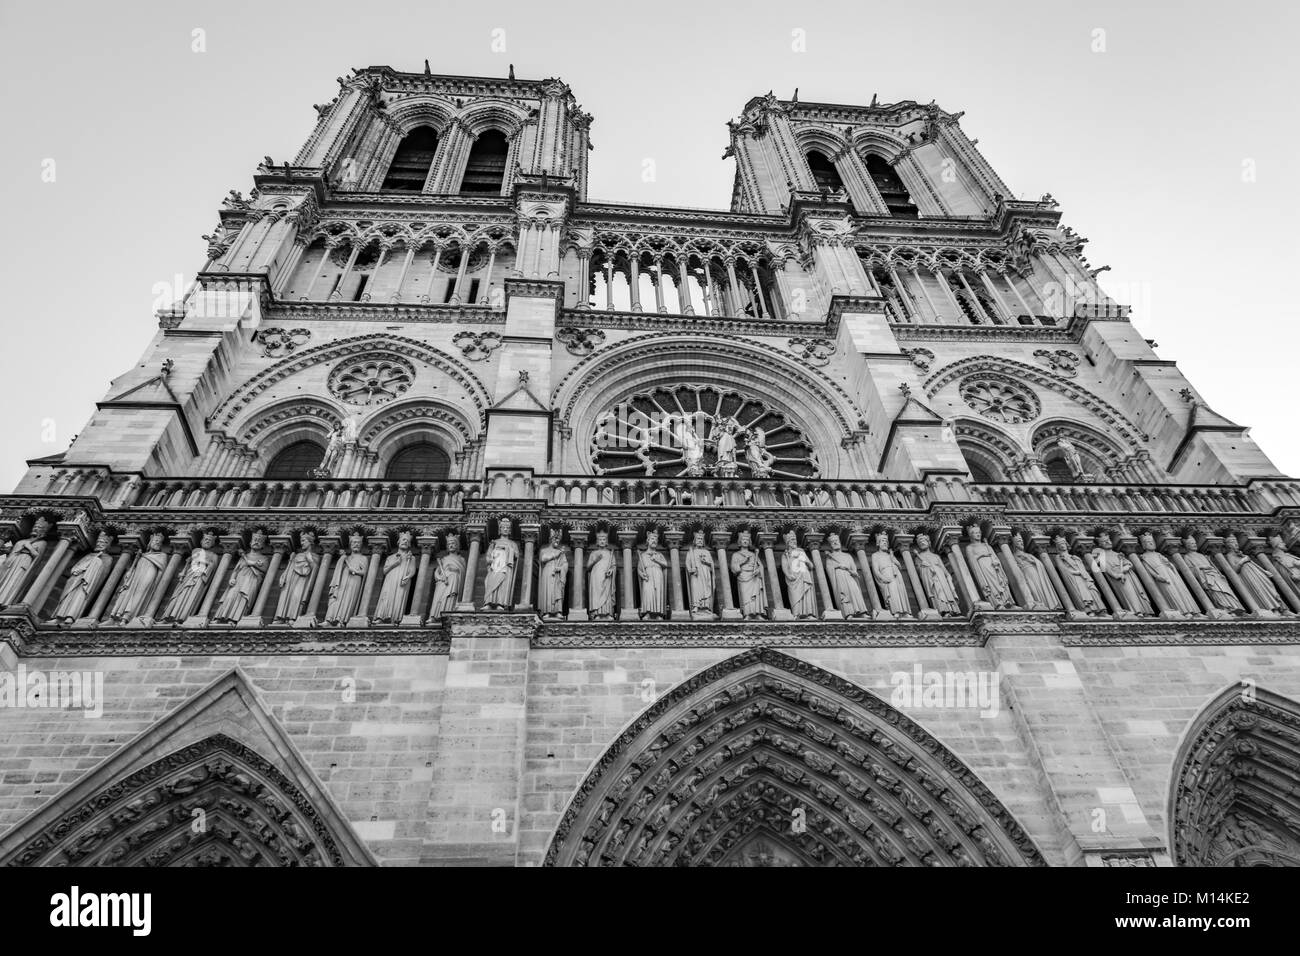 Paris, France: Facade of the medieval cathedral of Notre Dame de Paris. Stock Photo